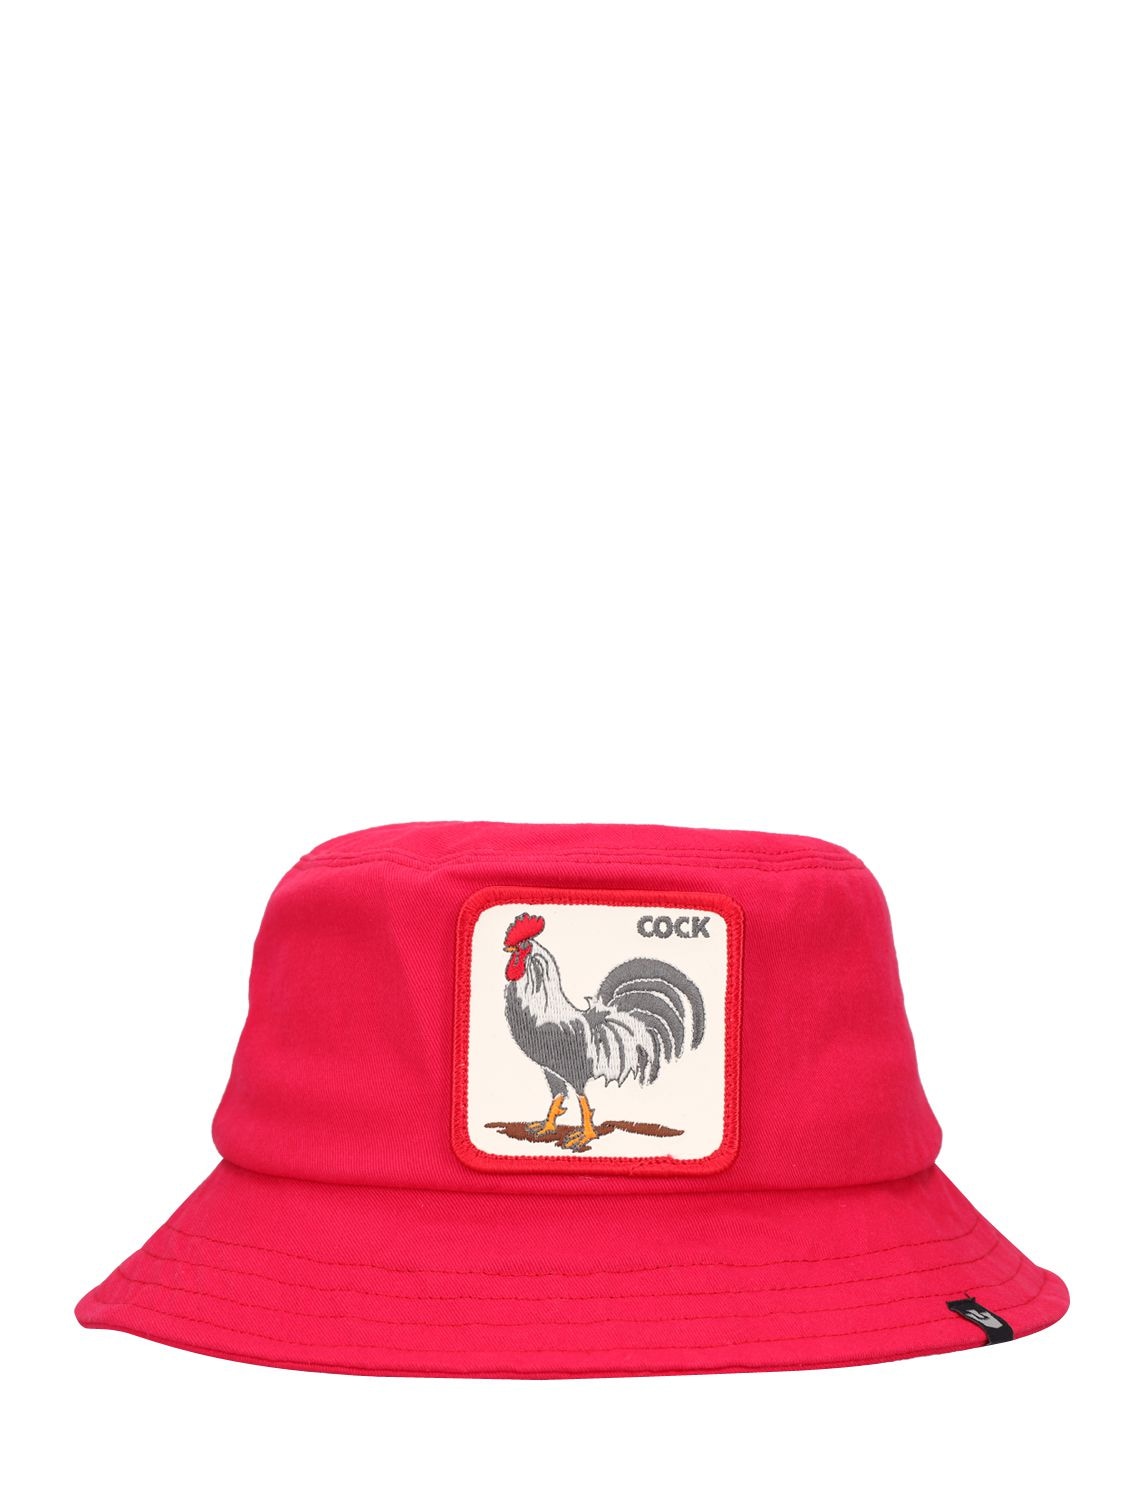 Goorin Bros Bucktown Rooster Cock Bucket Hat In Red,multi